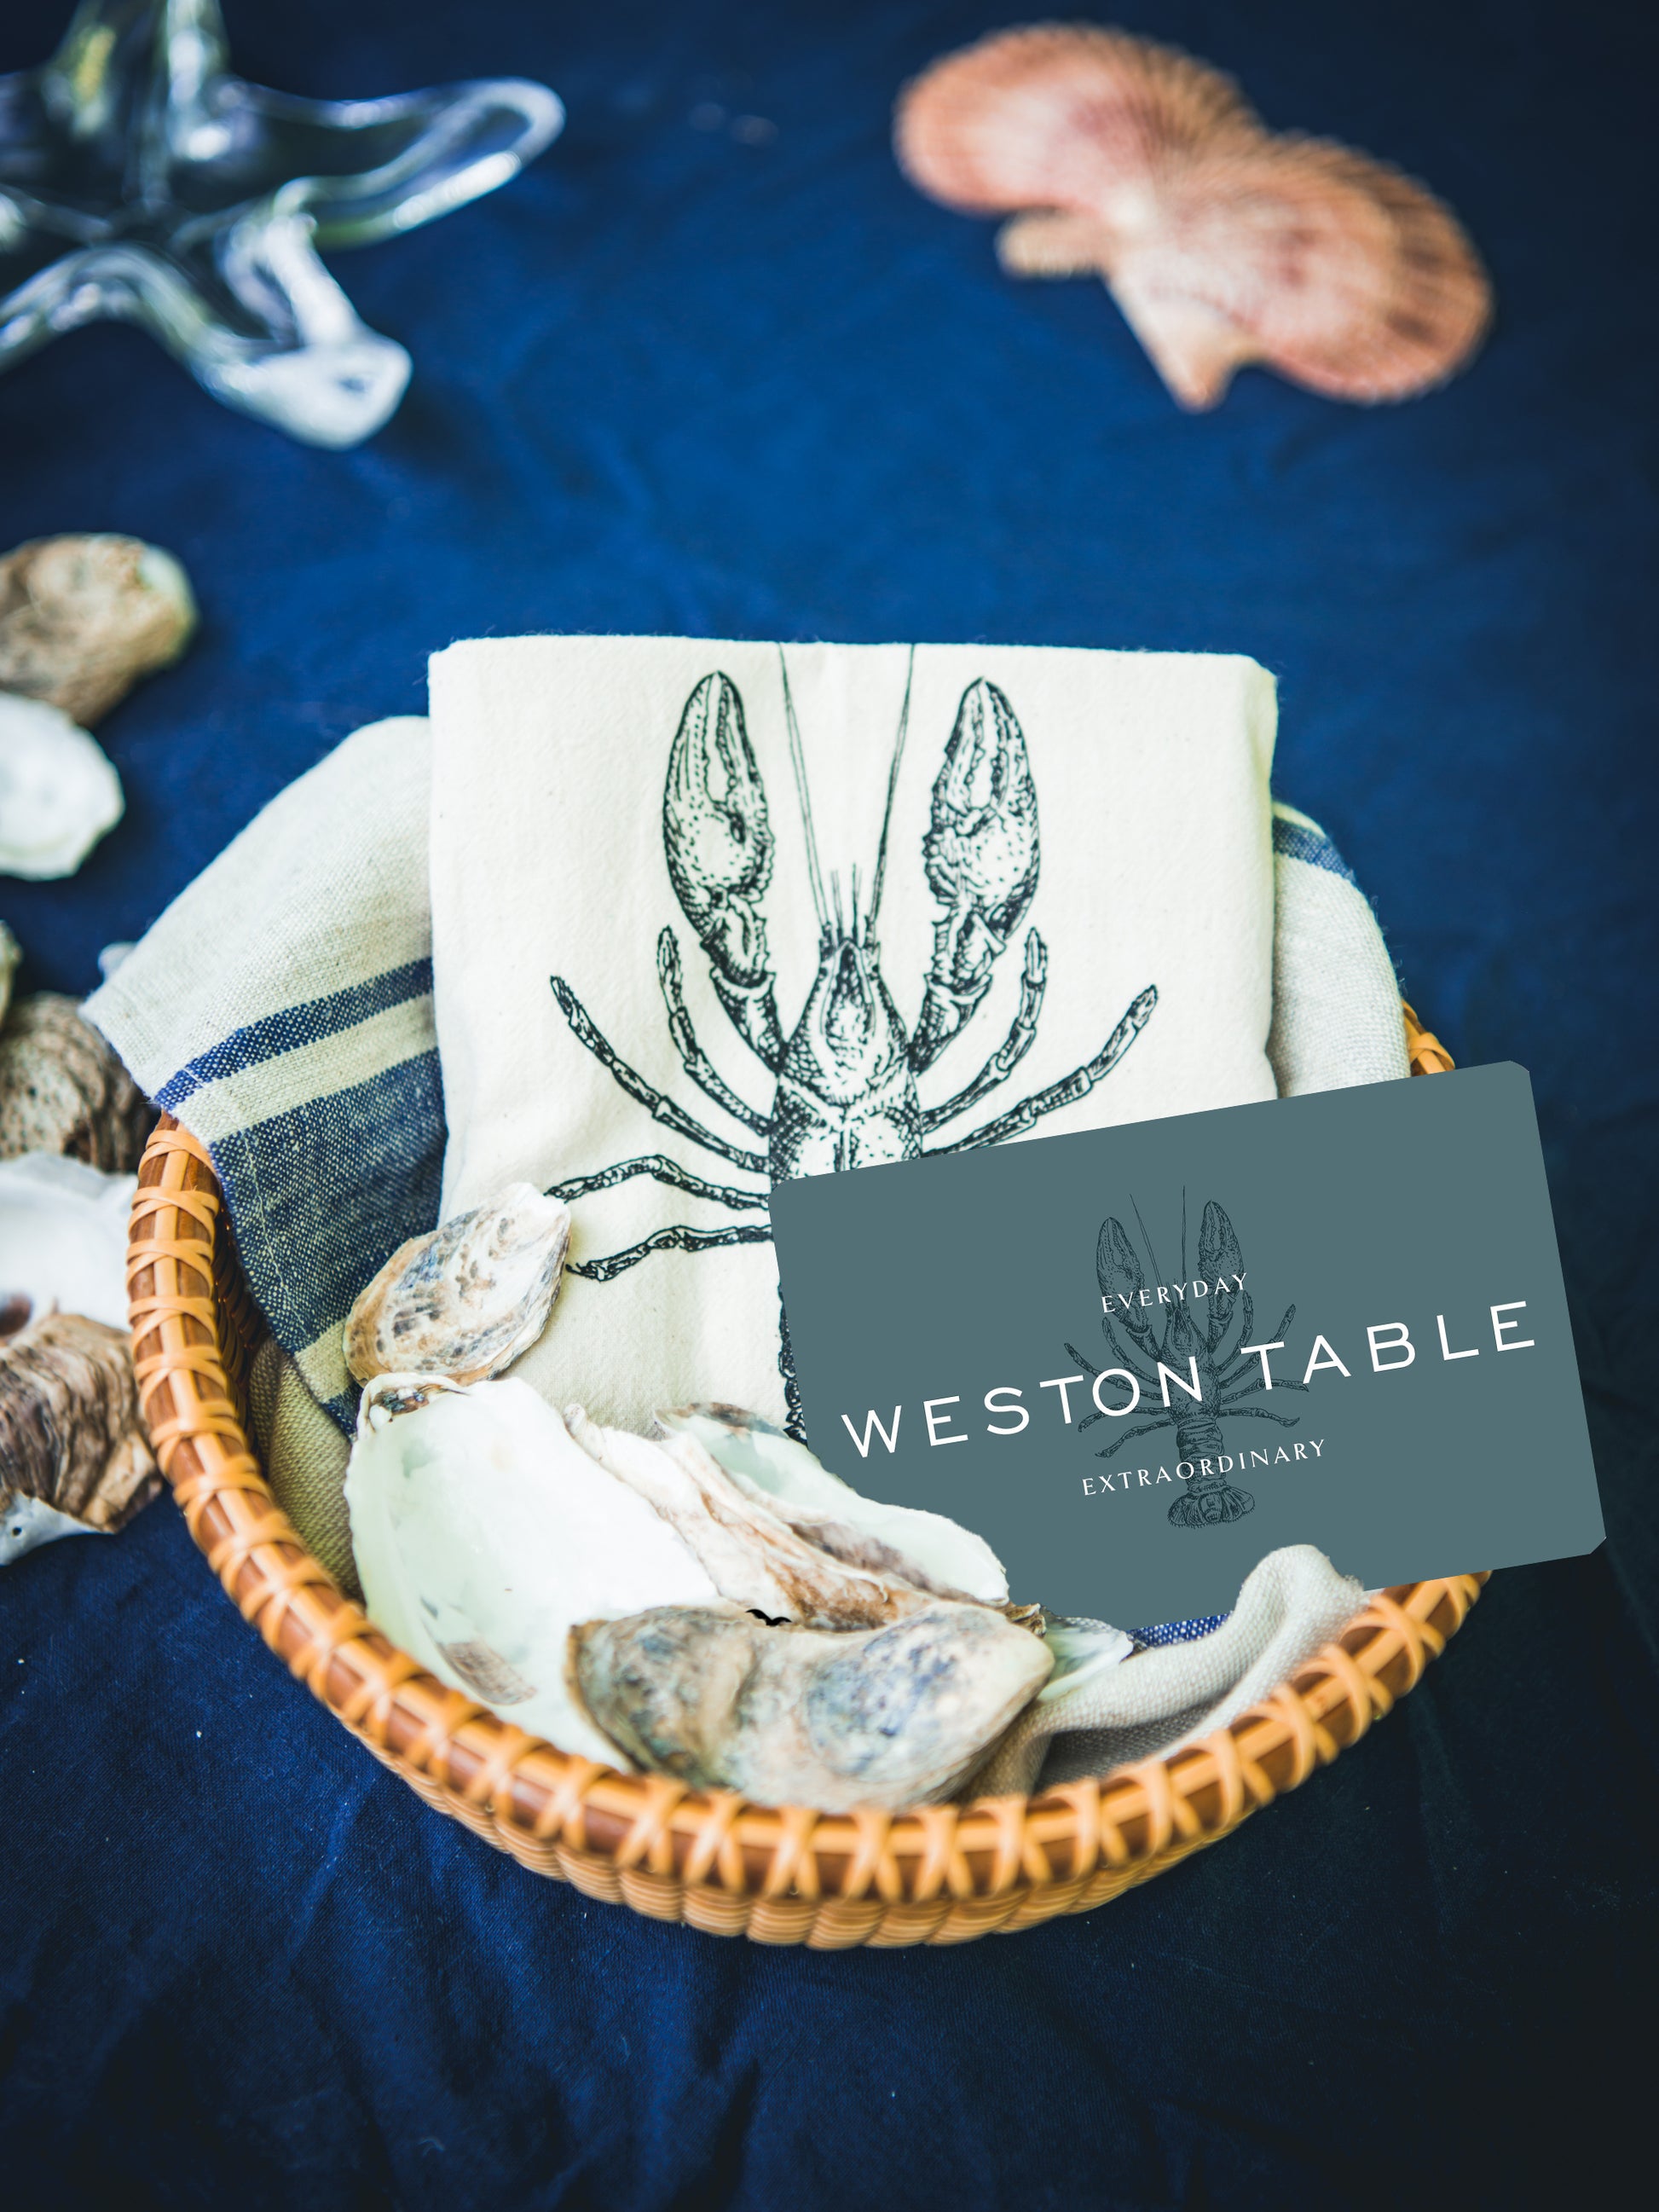 Weston Table Everyday Extraordinary Gift Card Weston Table